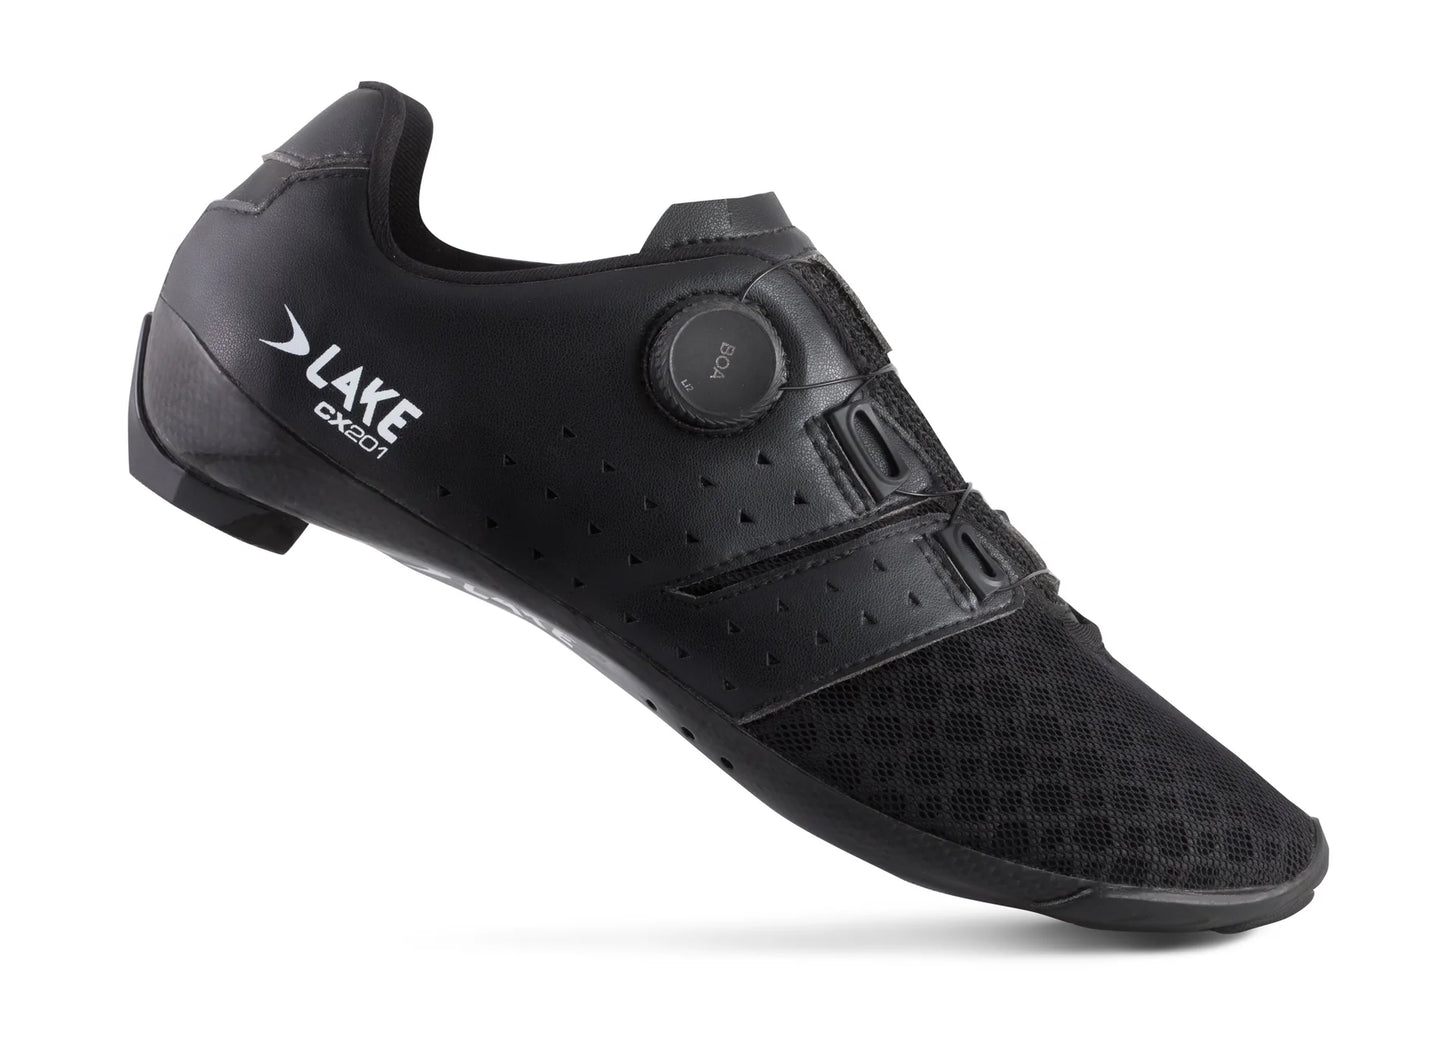 Lake CX201 Road Cycling Shoes